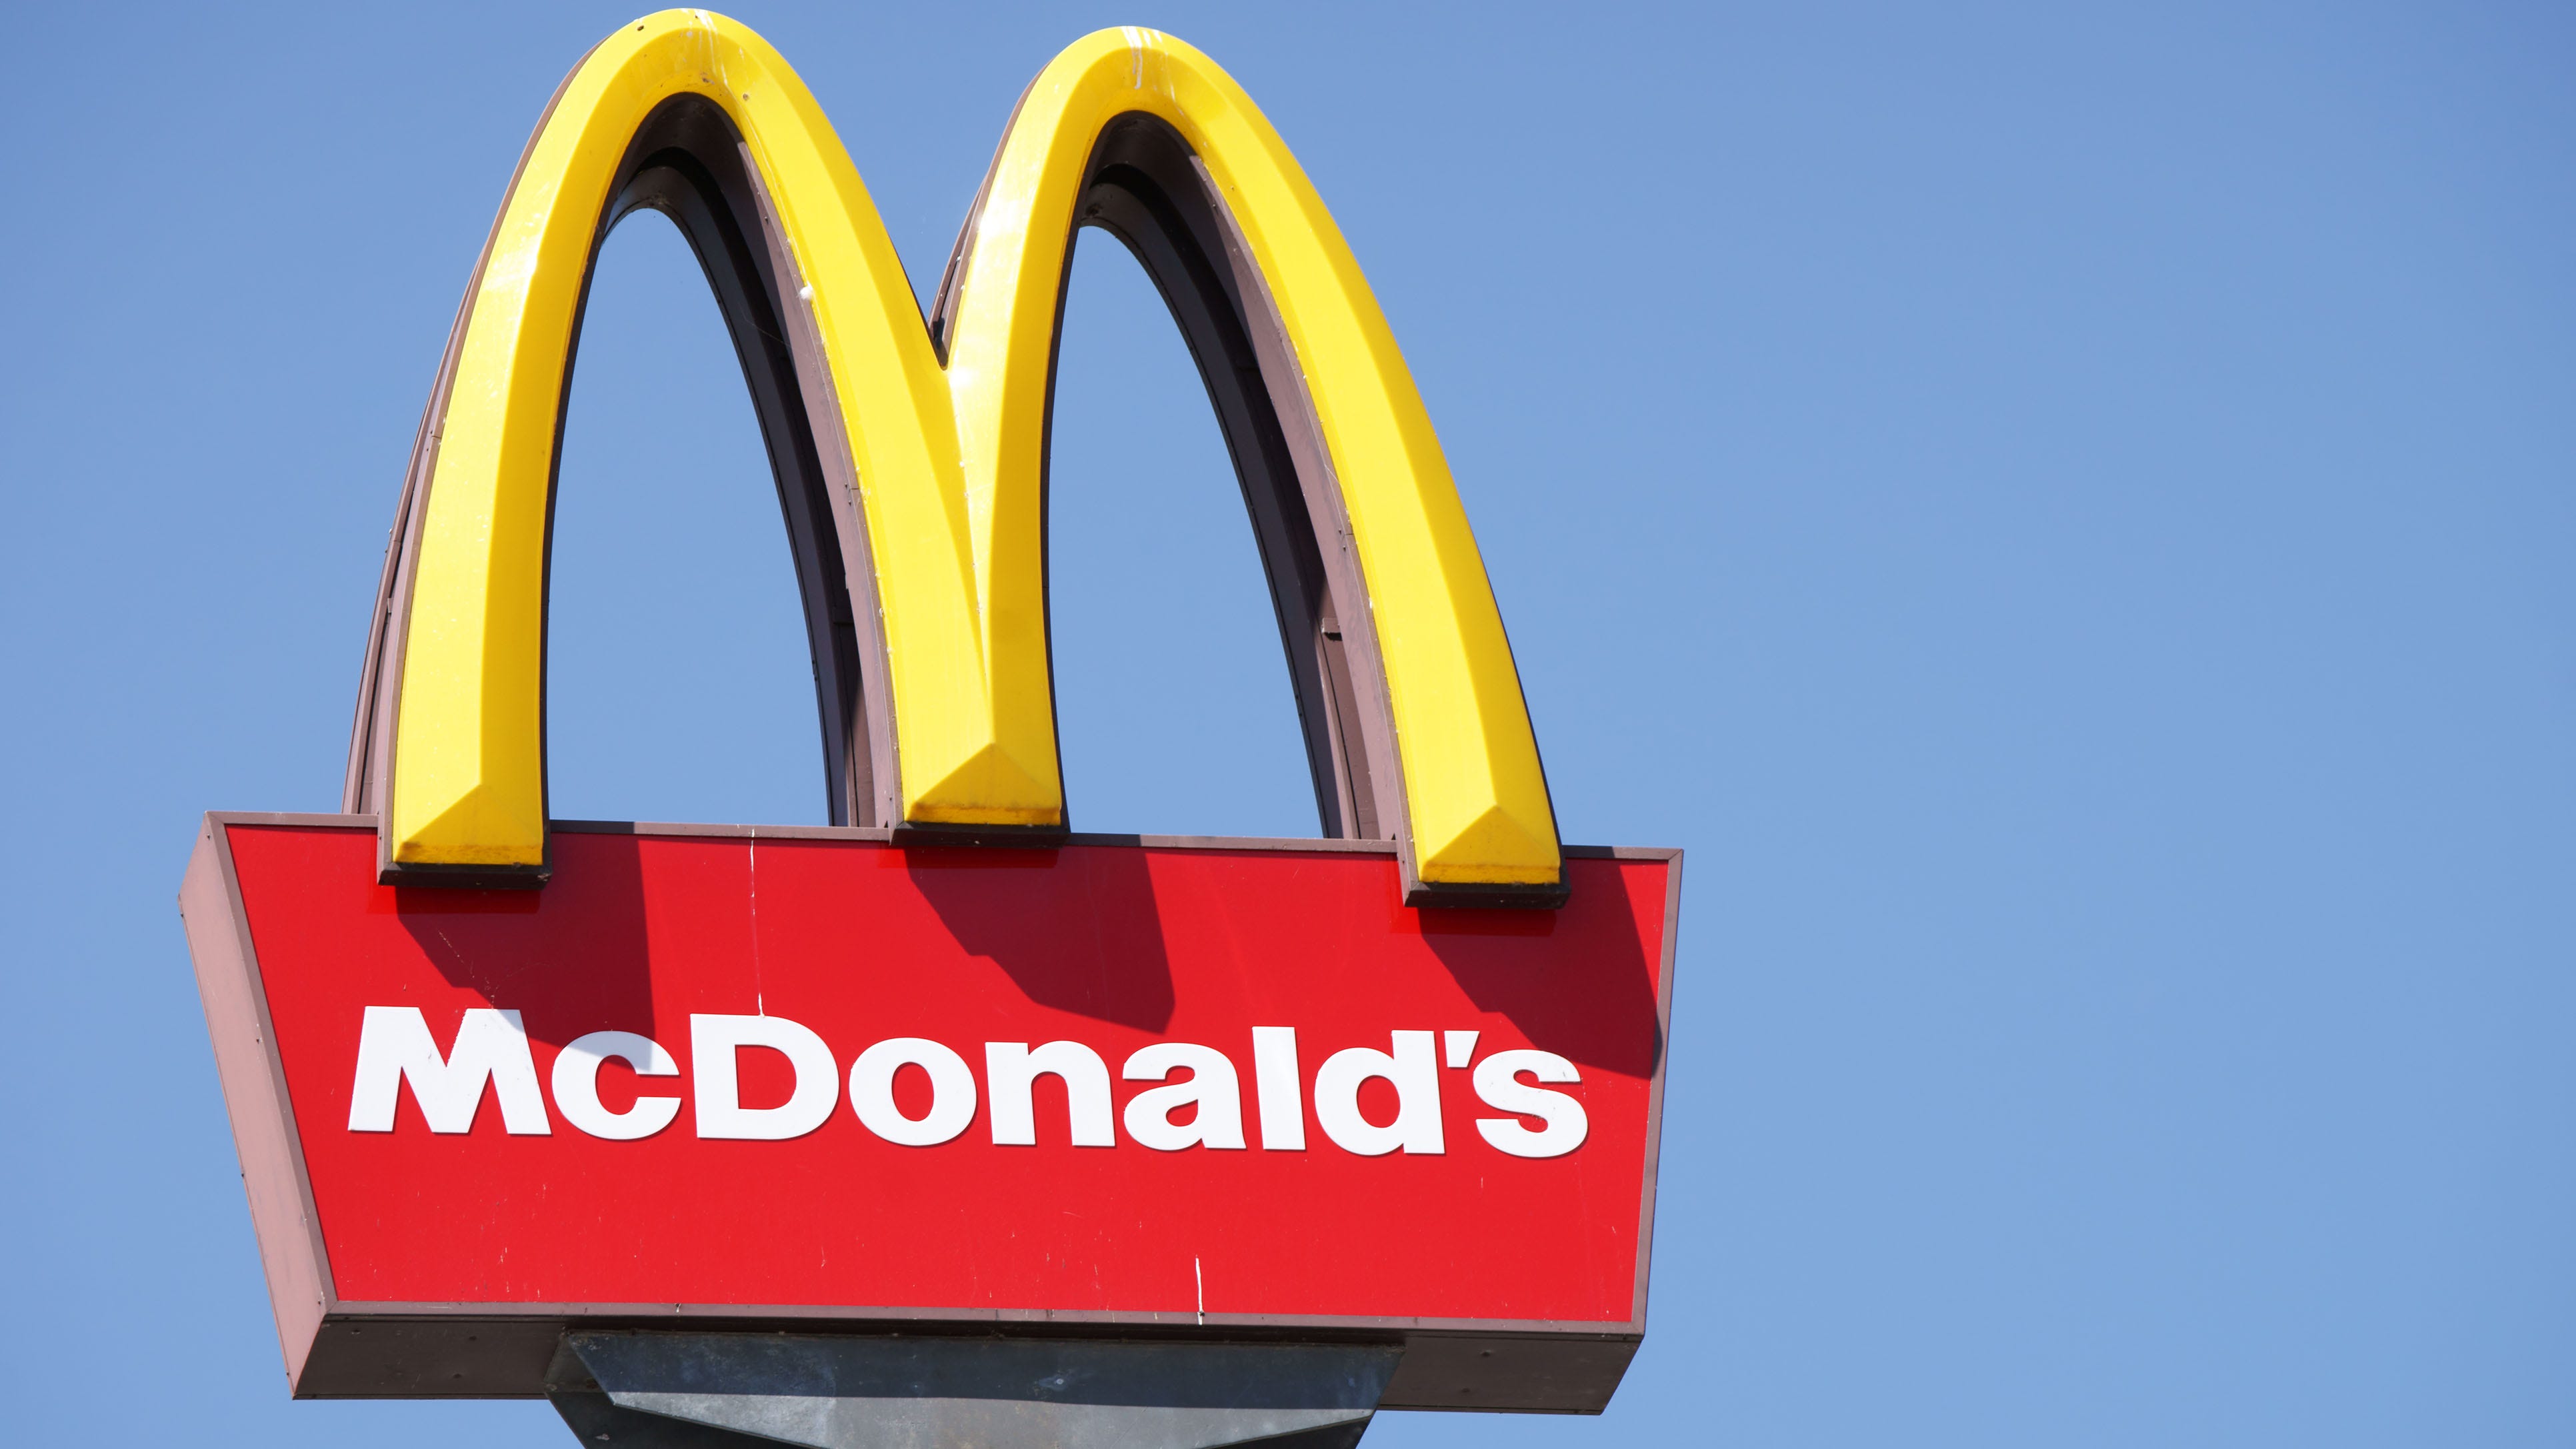 Fleeing suspect in Tennessee found hiding in McDonald's freezer: report